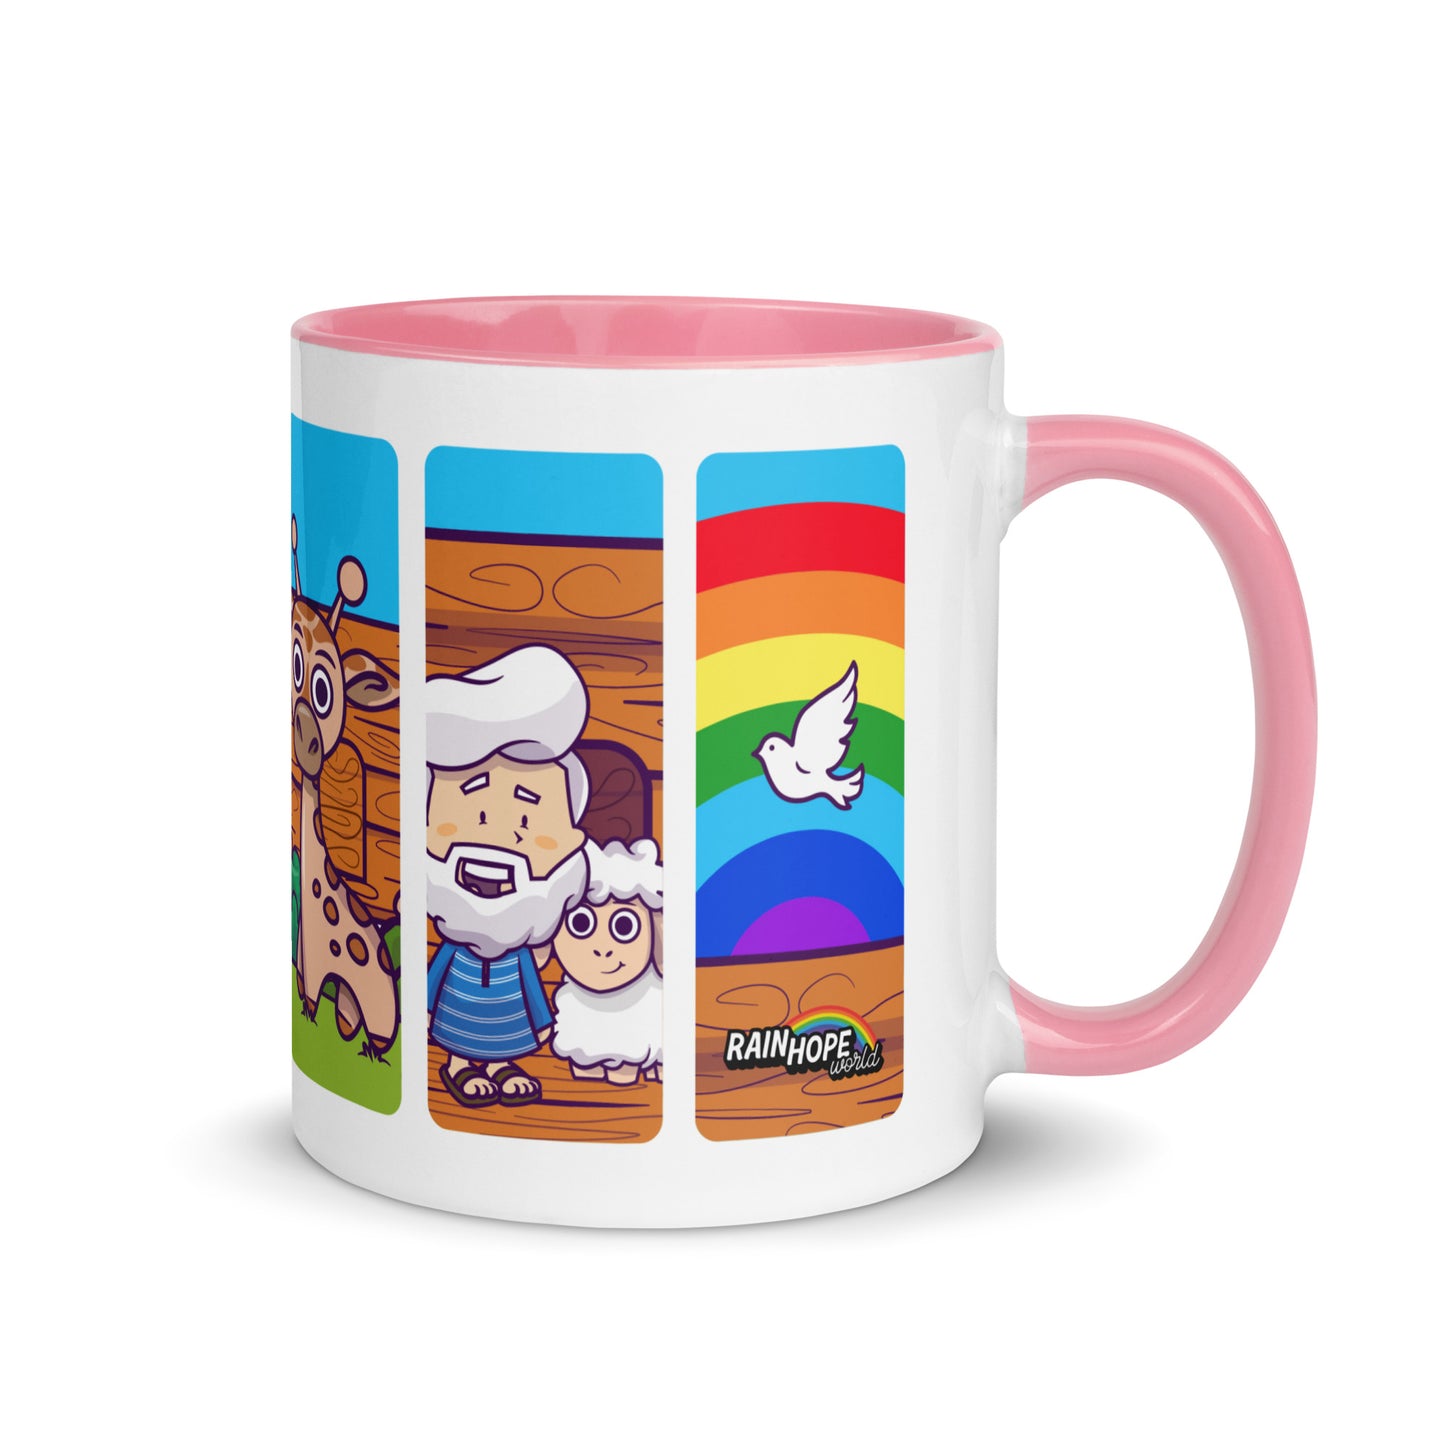 Noah's Ark Mug with Color Inside